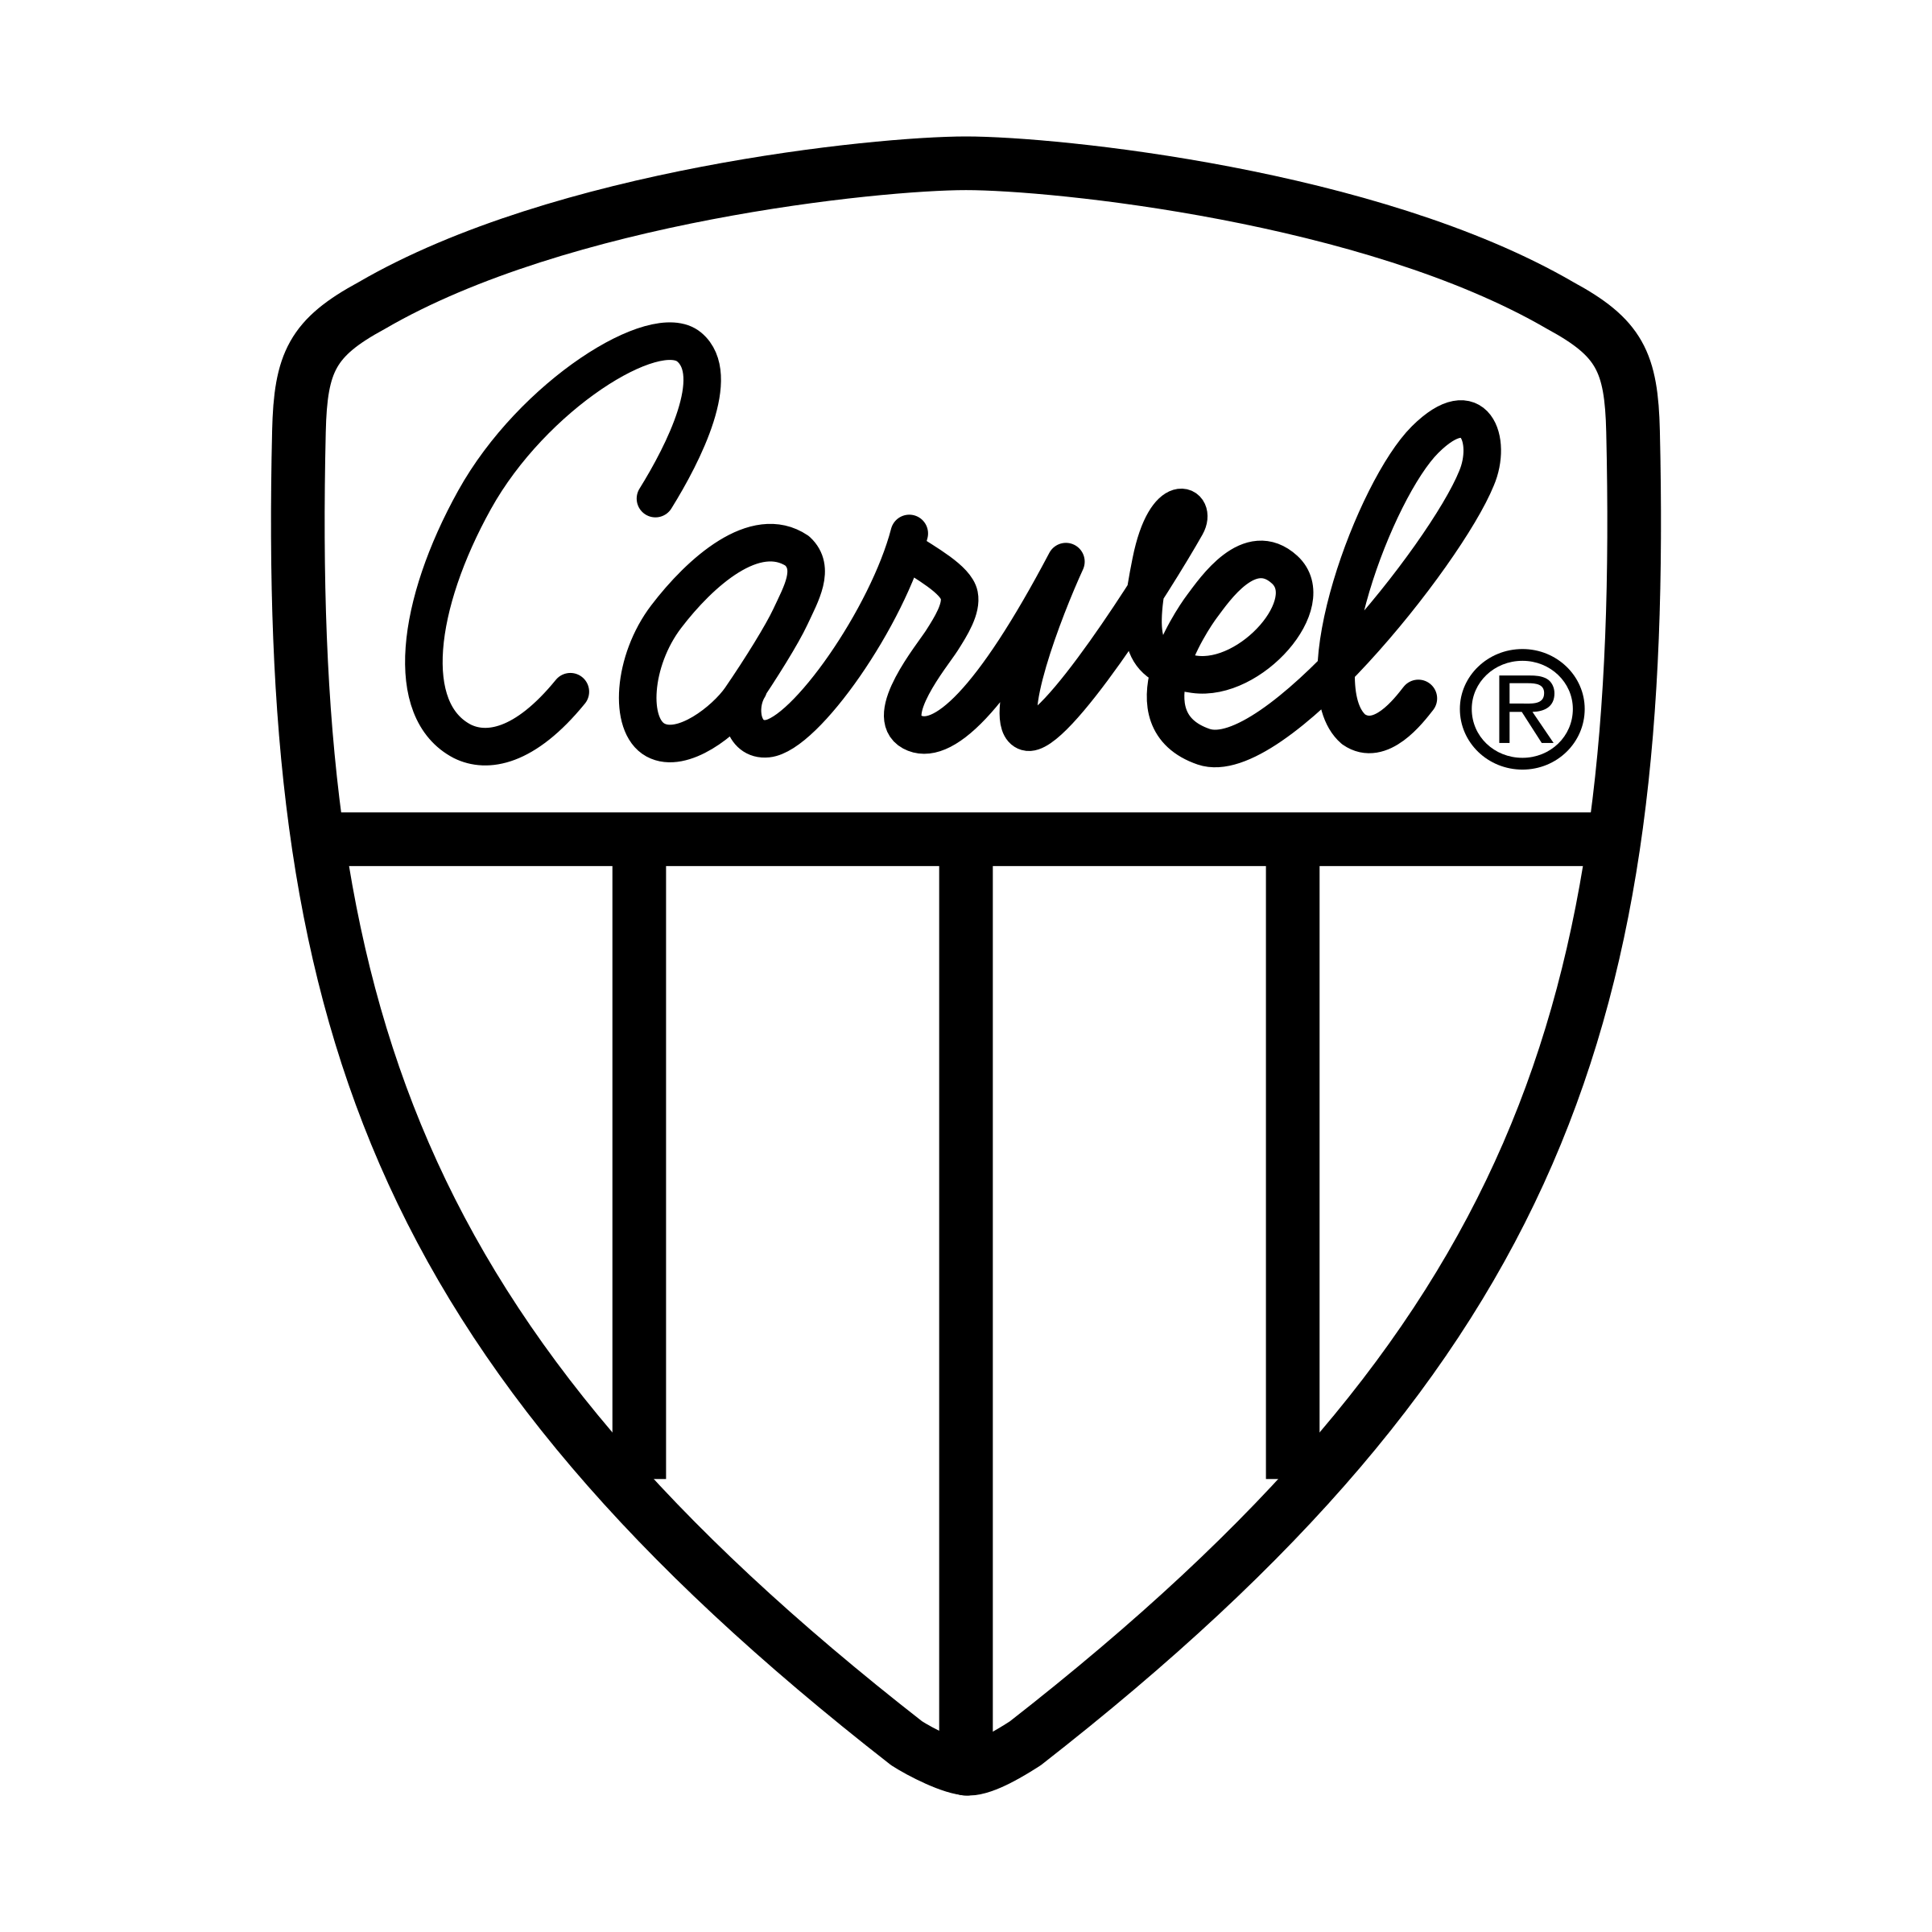 Carvel Logo - Carvel Ice Cream Logo PNG Transparent & SVG Vector - Freebie Supply